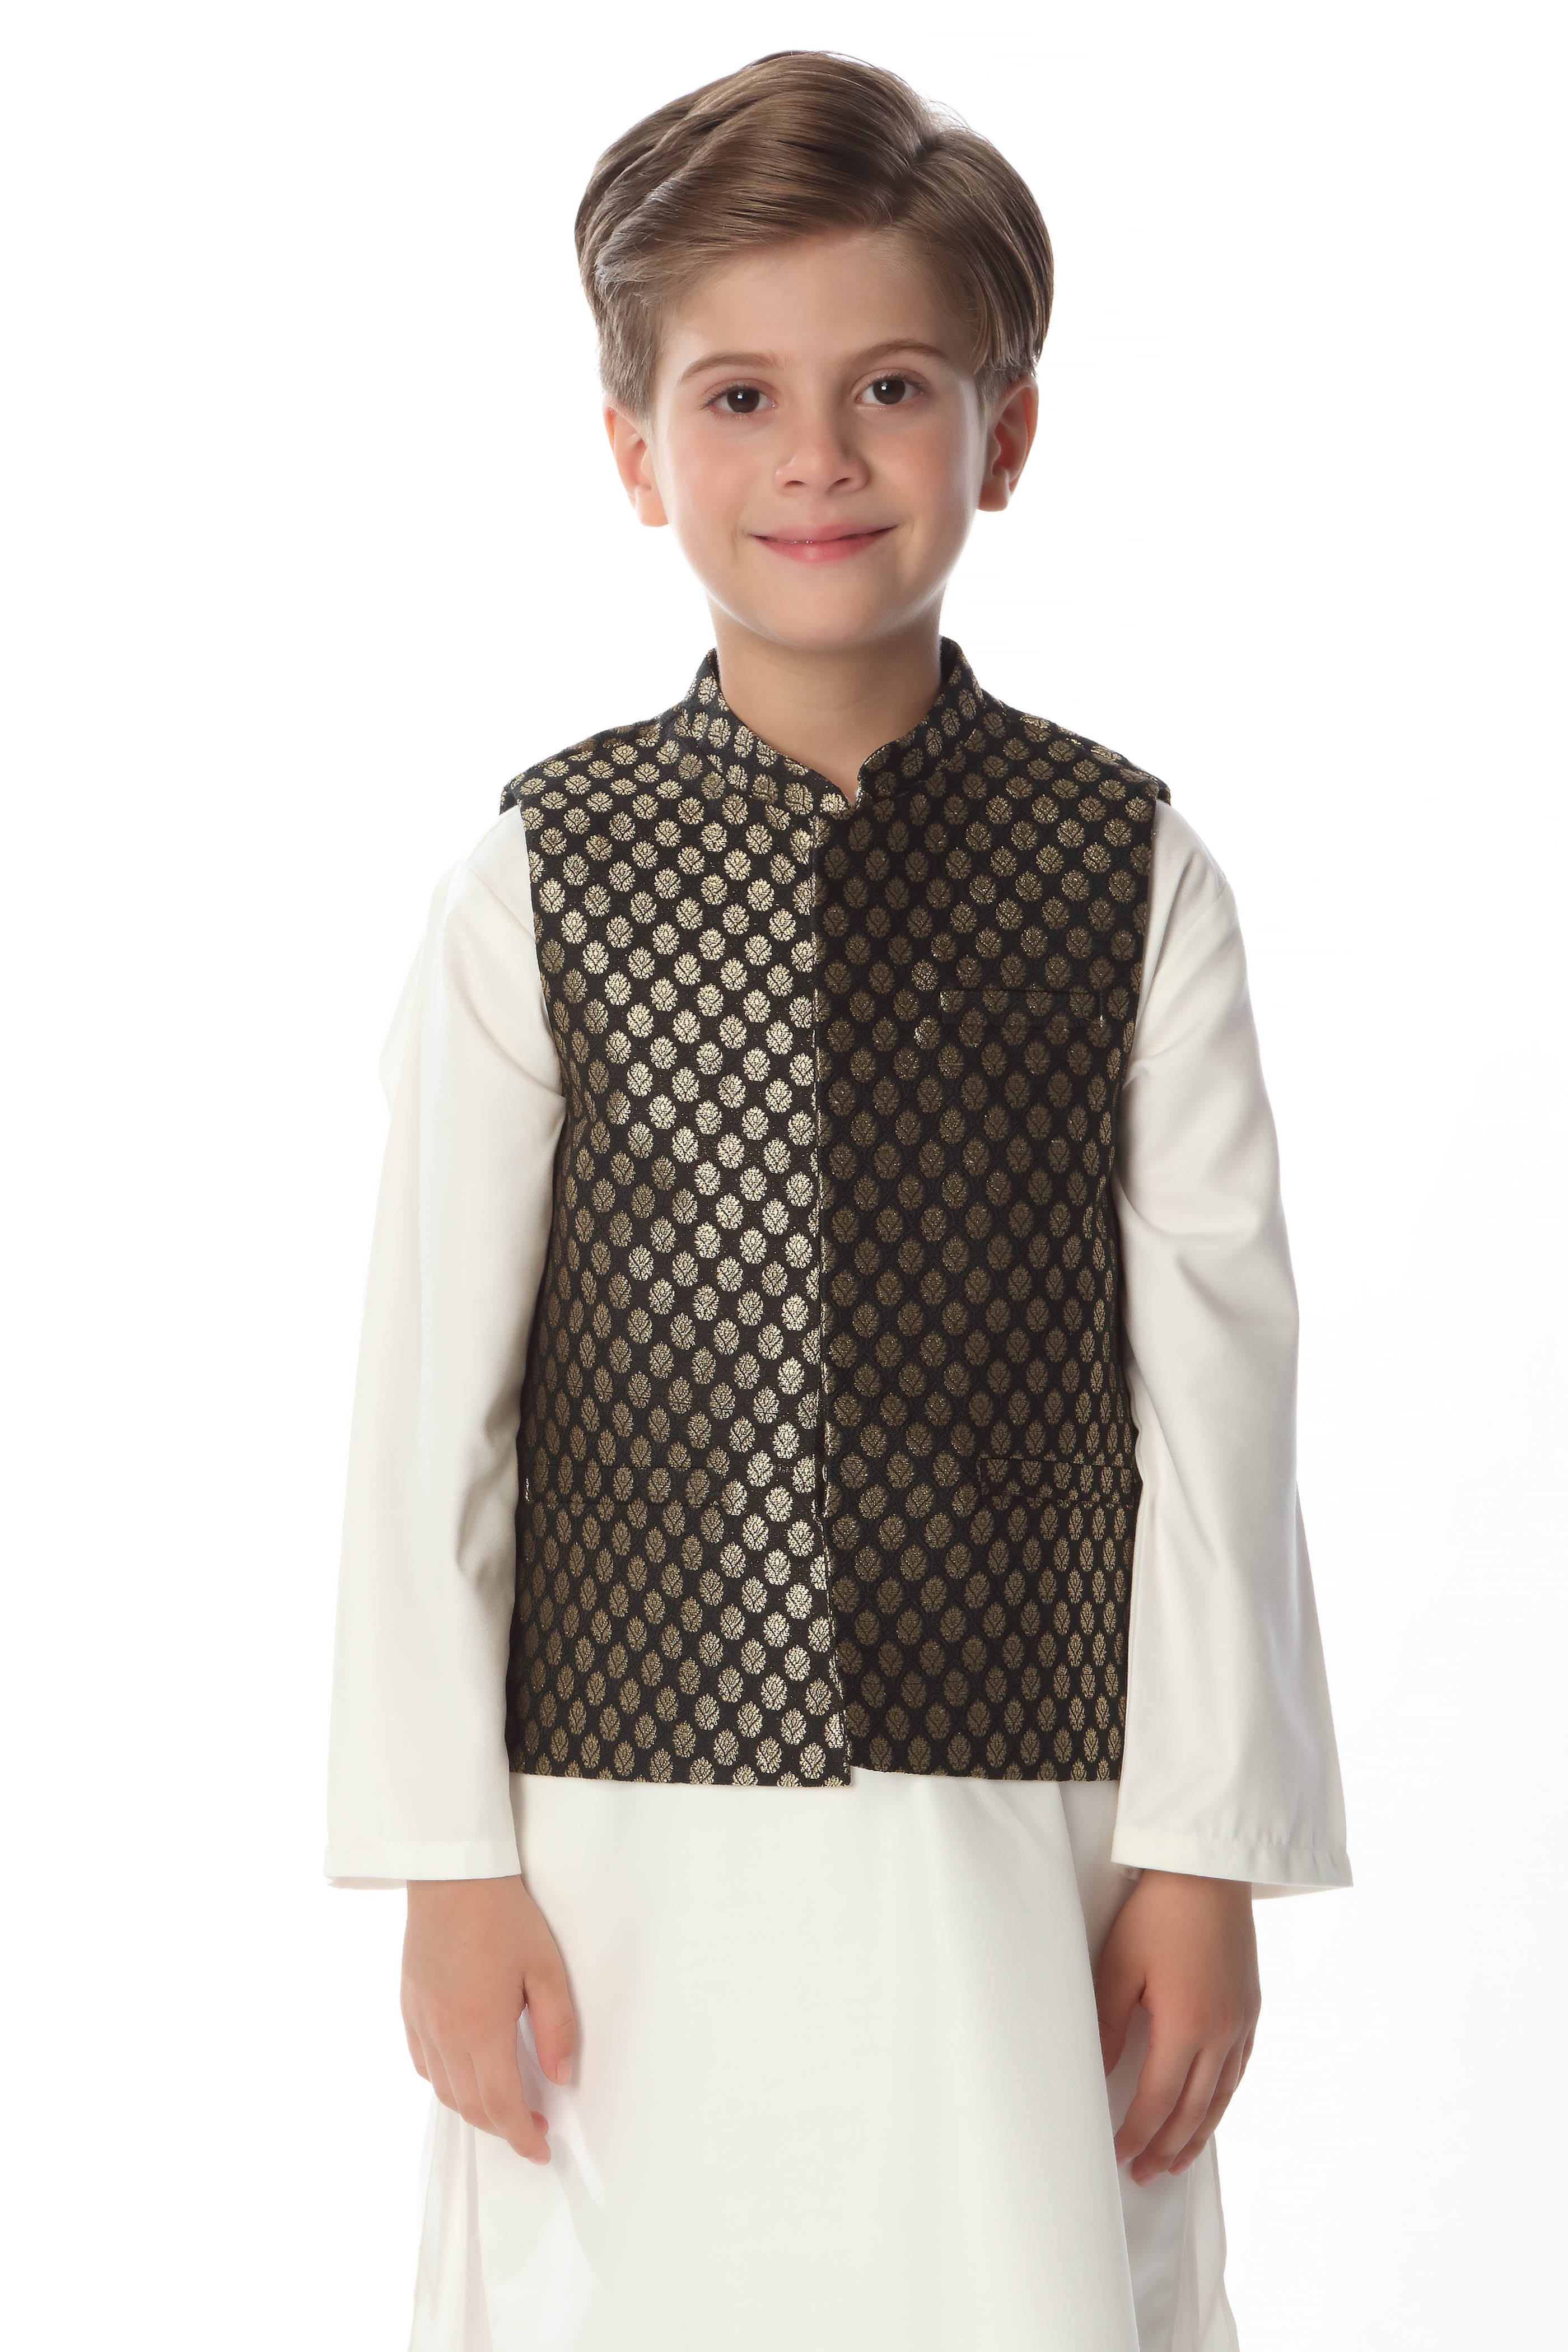 Waistcoat - Soft Jacquard | Black &Amp; Golden - Best Kids Clothing Brands In Pakistan Online|Minnie Minors